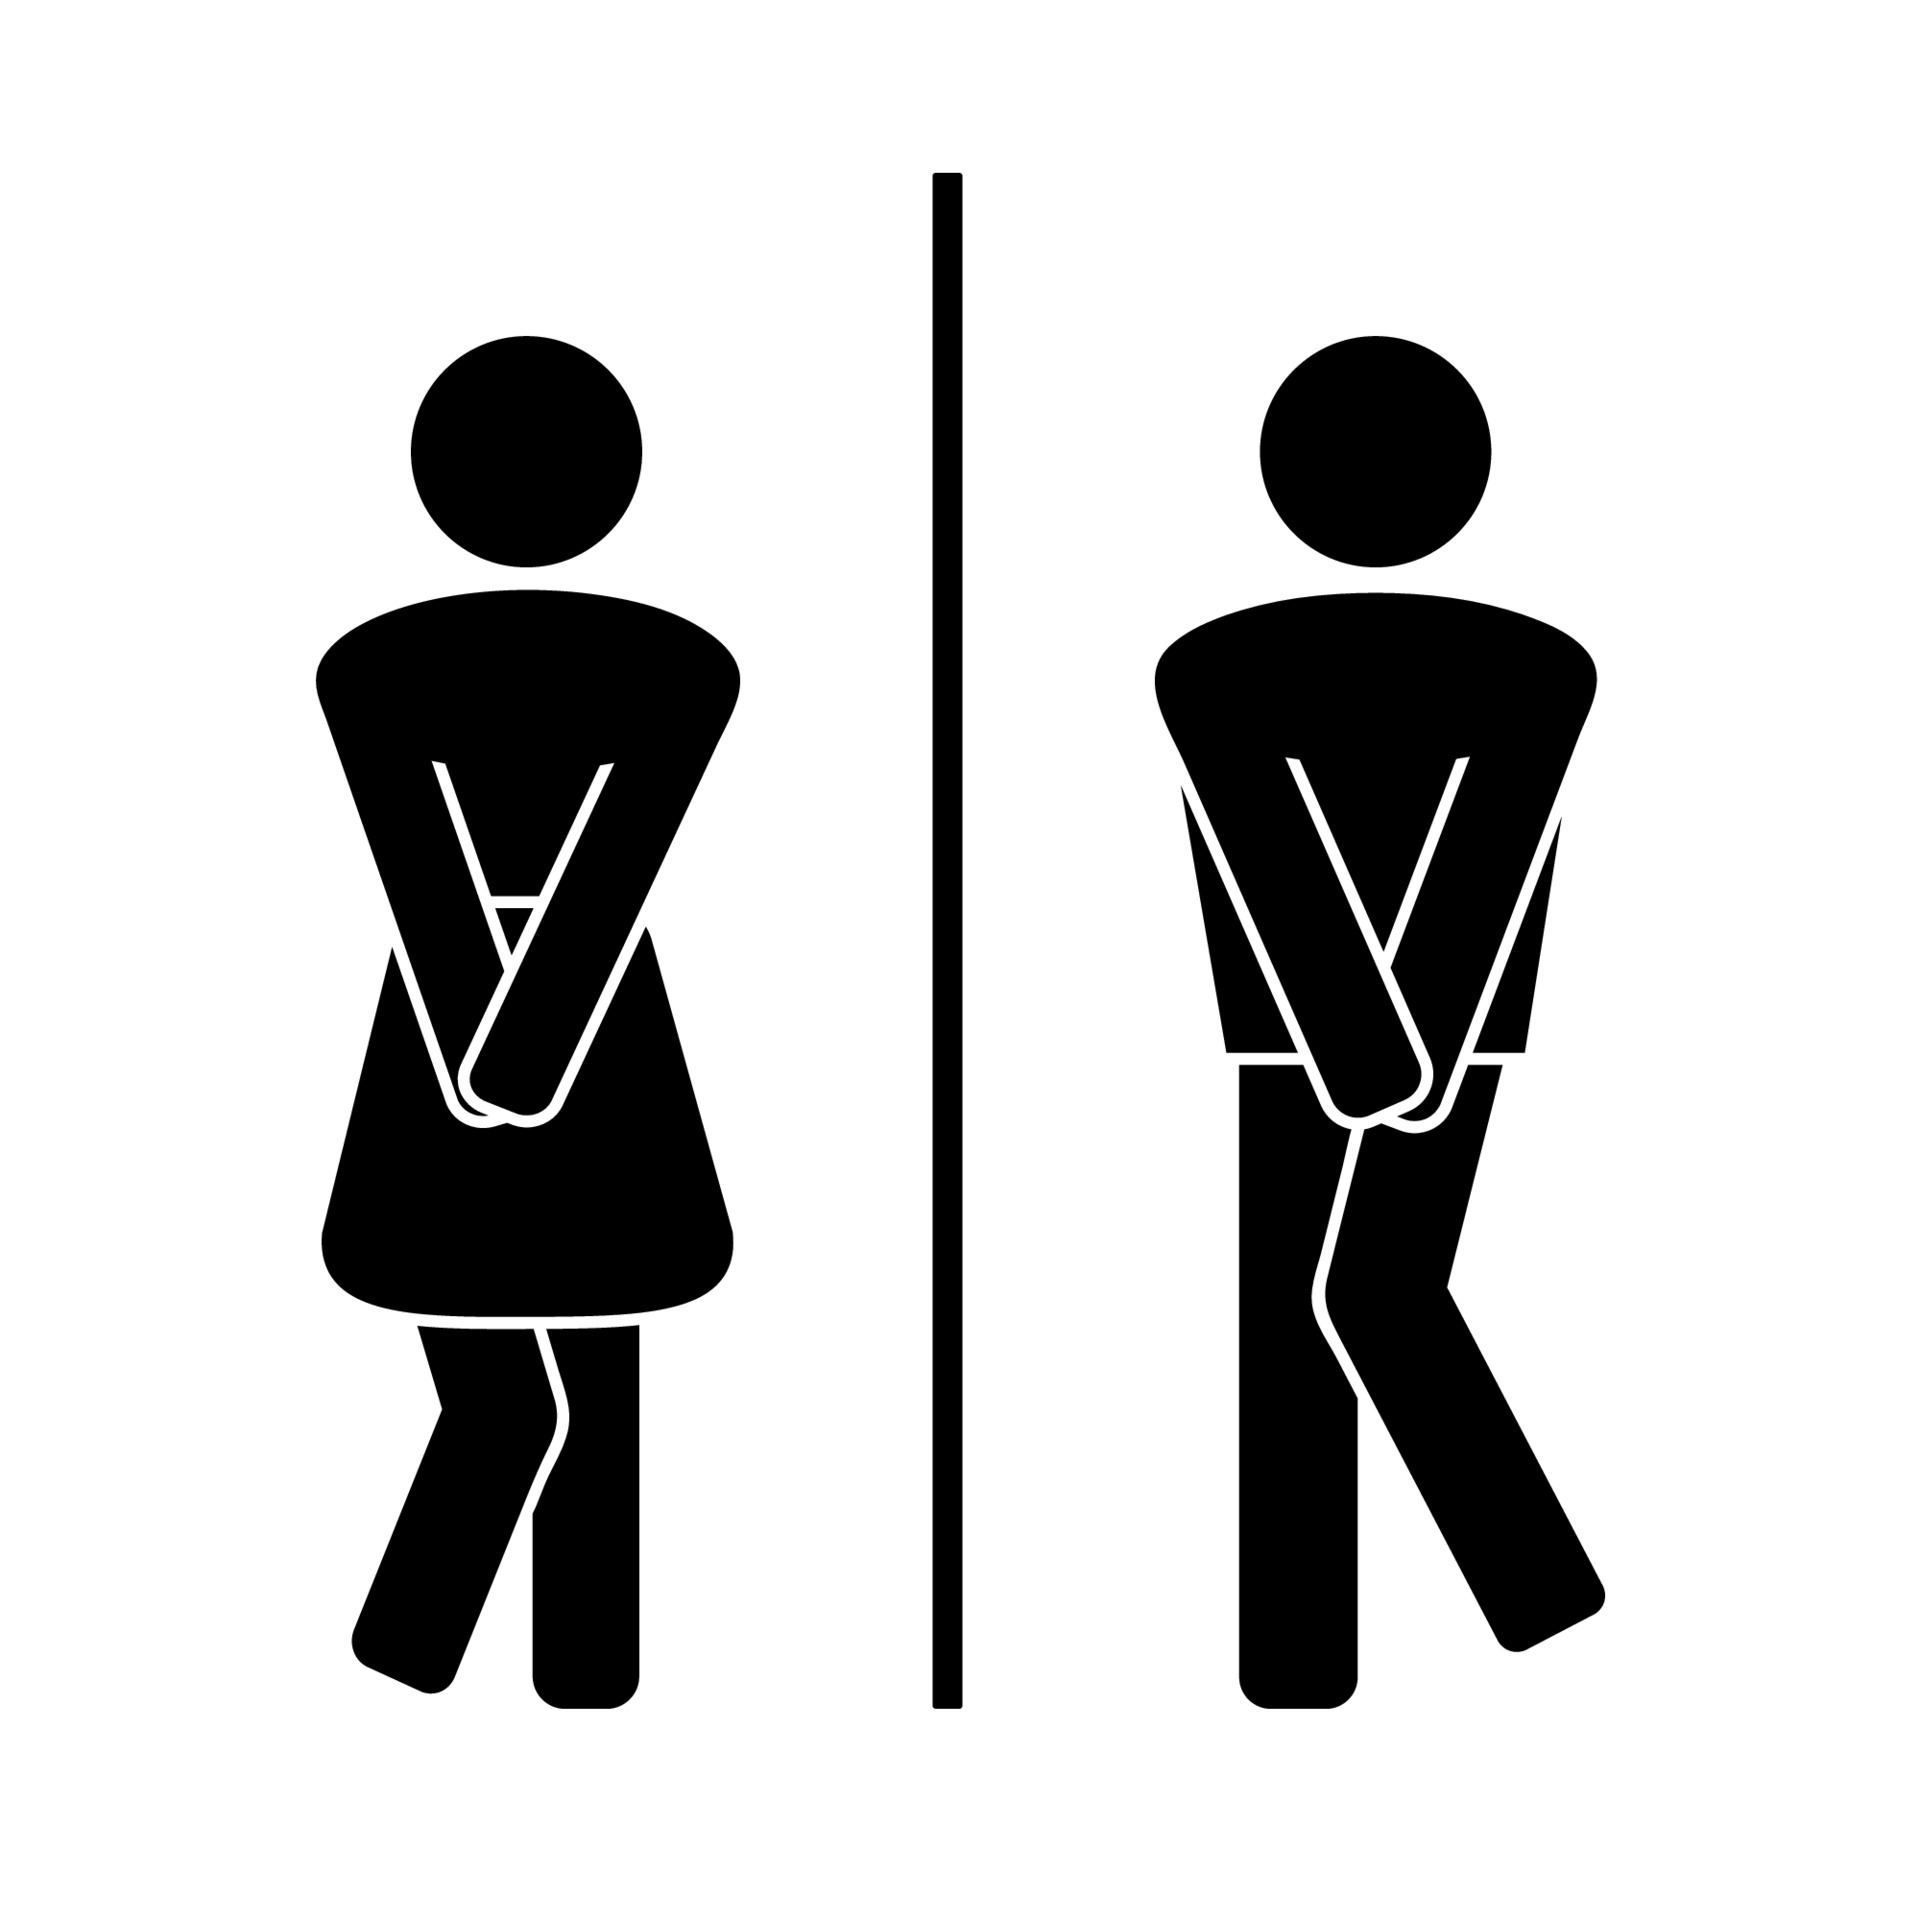 adriel avila recommends girls pee on man pic